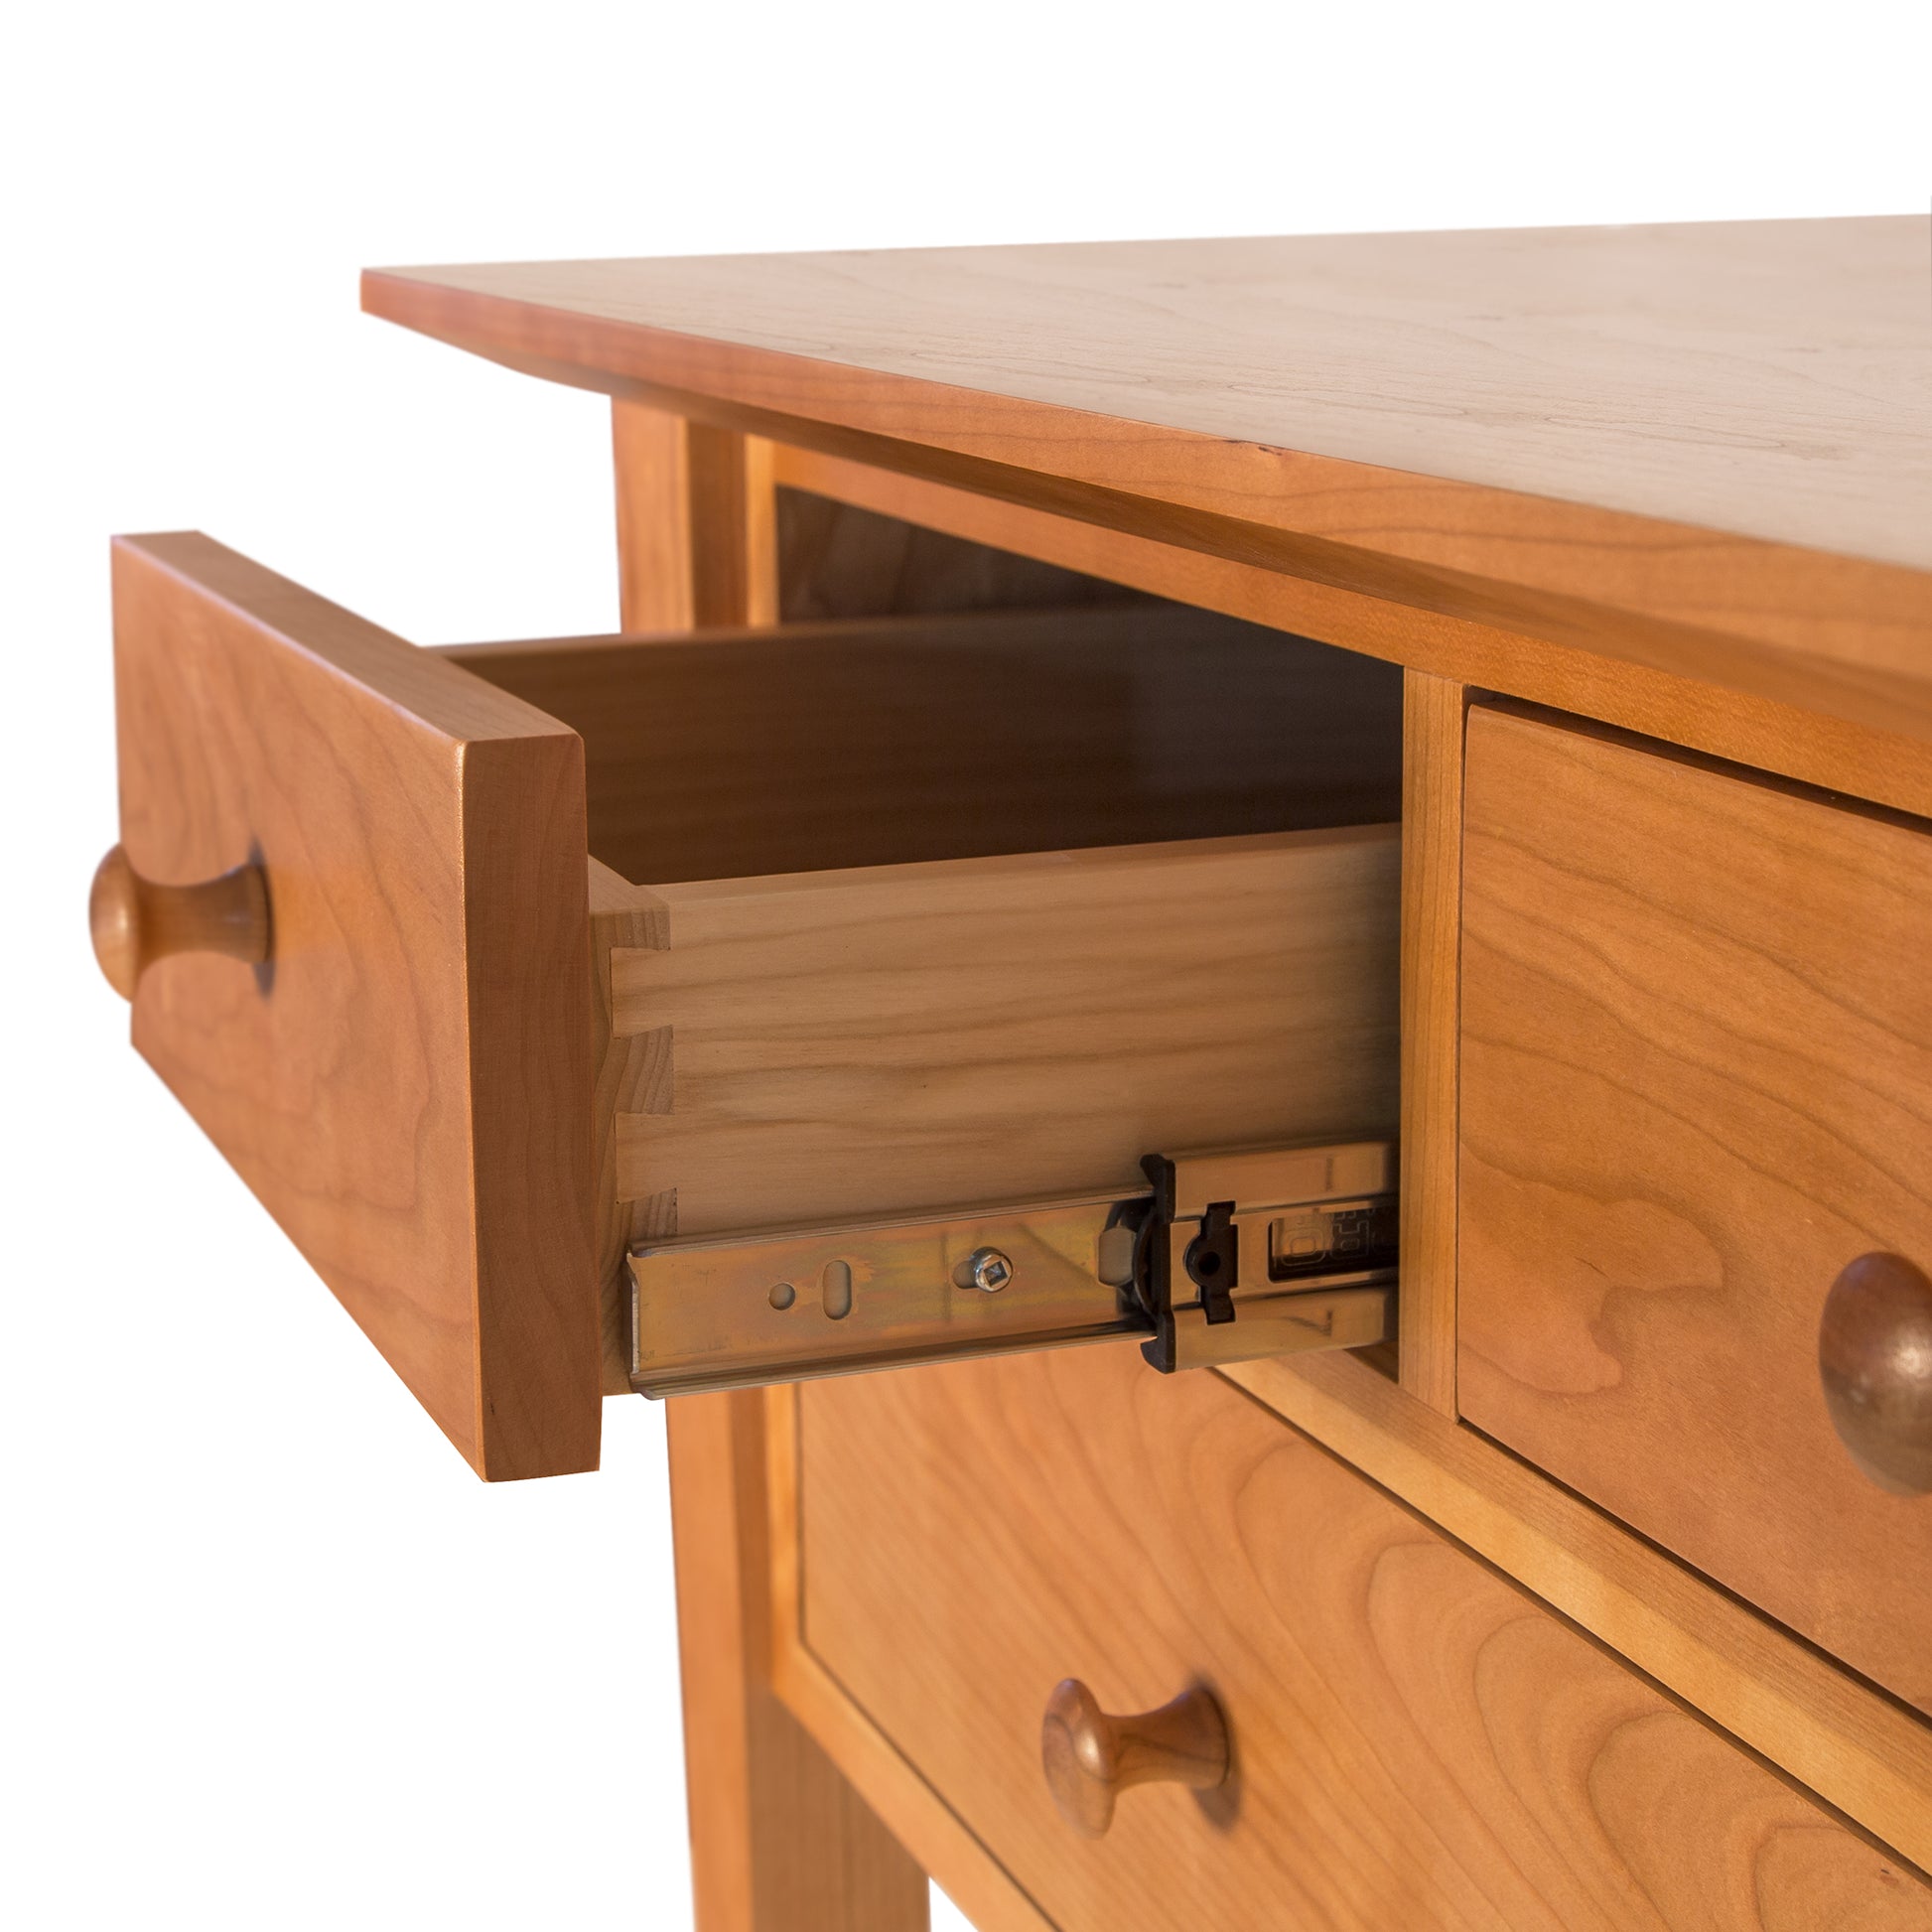 A Classic Shaker Flare Leg 48" Hunt Board is open on a Lyndon Furniture wooden dresser.